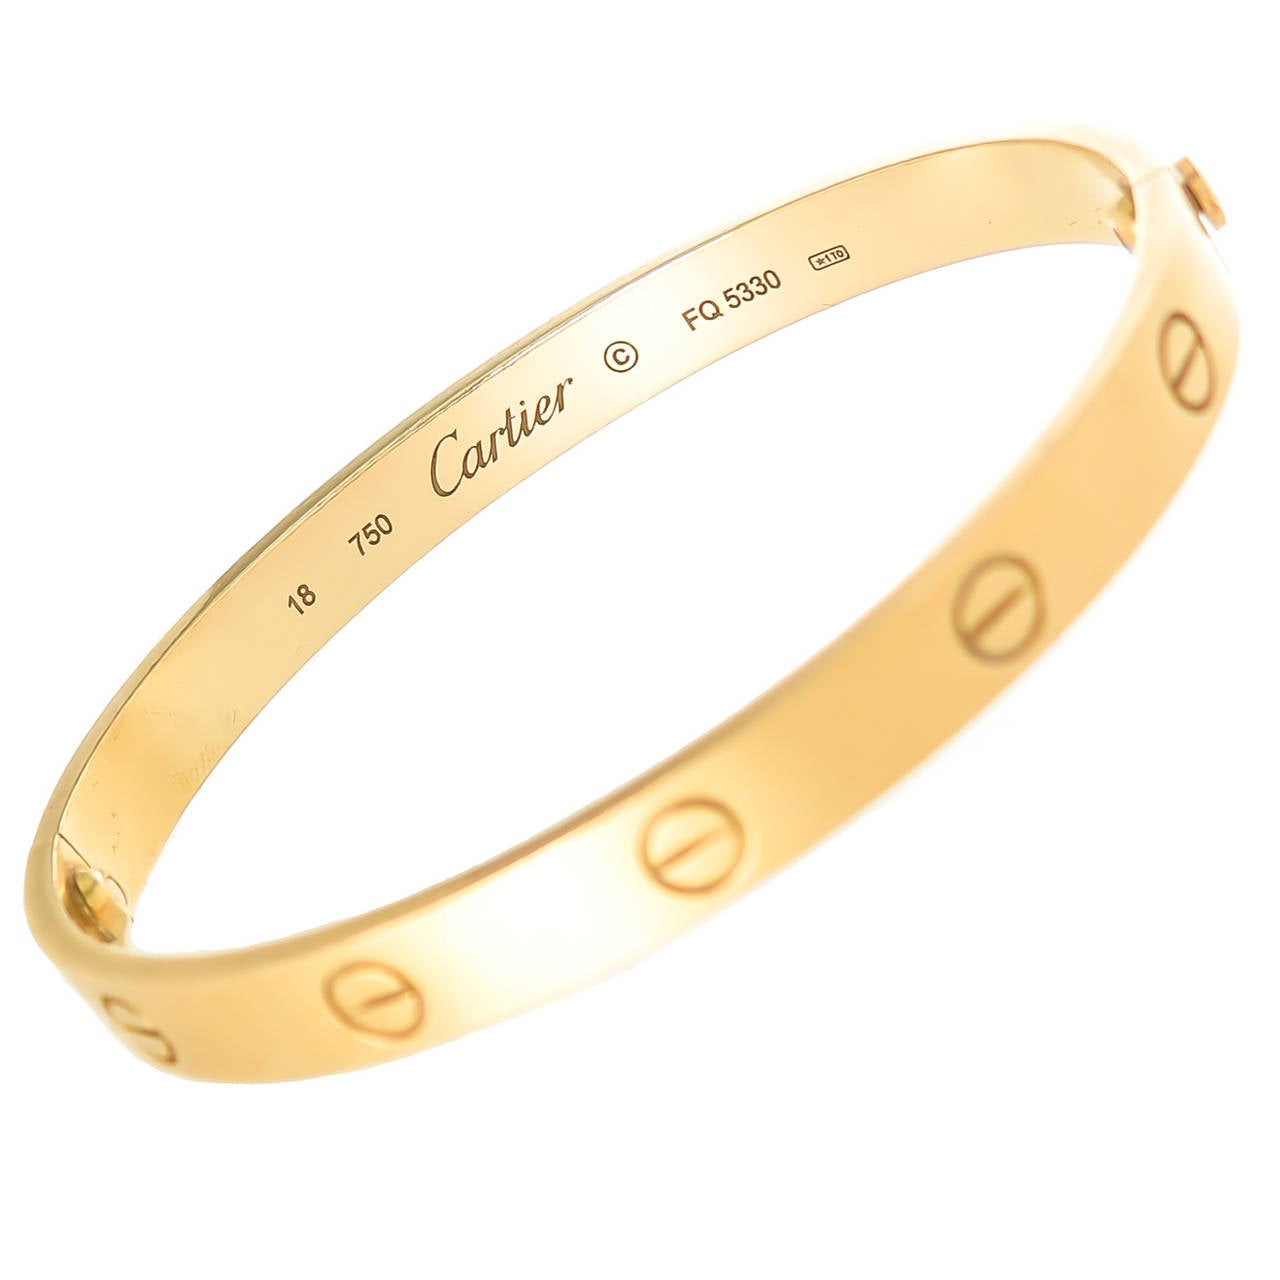 Circa 2012 Cartier 18K yellow Gold size 18 Love Bracelet. With Original Presentation Box and Screw Driver.